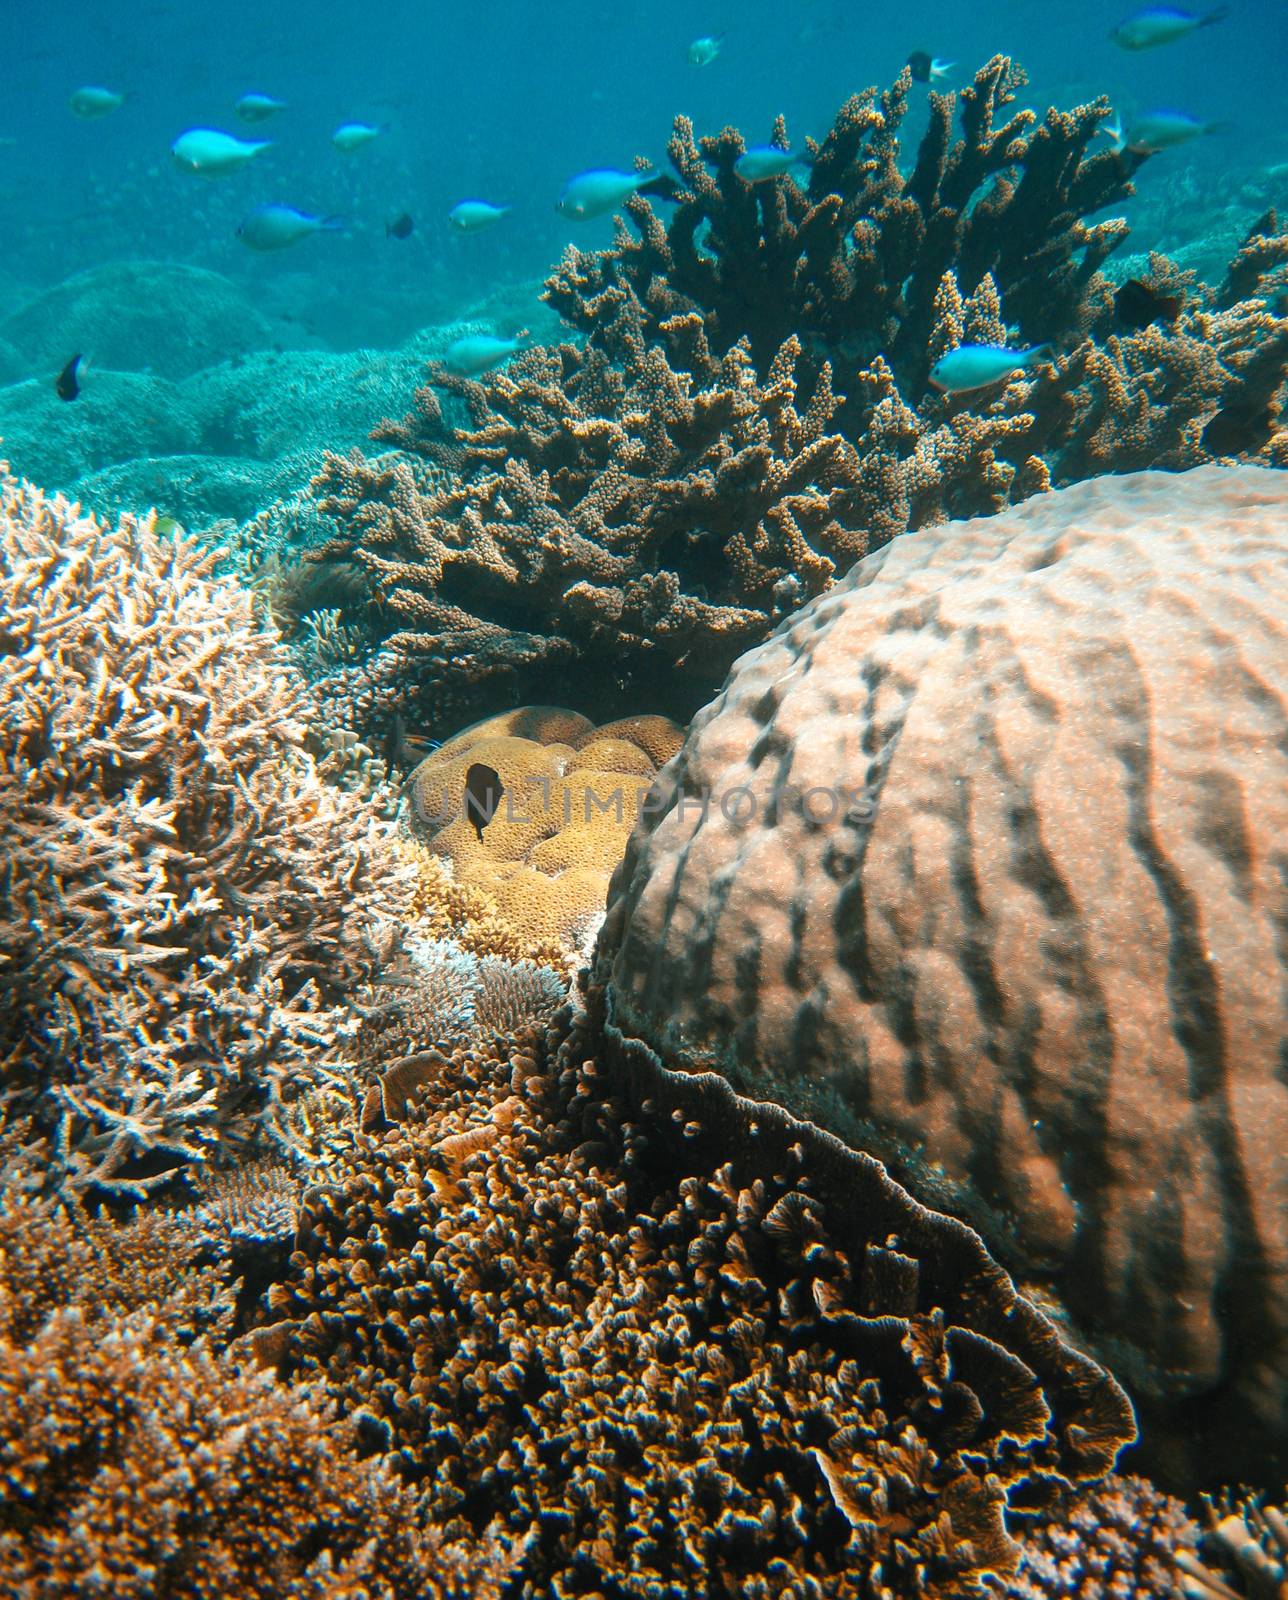 Underwater sea life in Queensland. Australian Coral Reef by jovannig